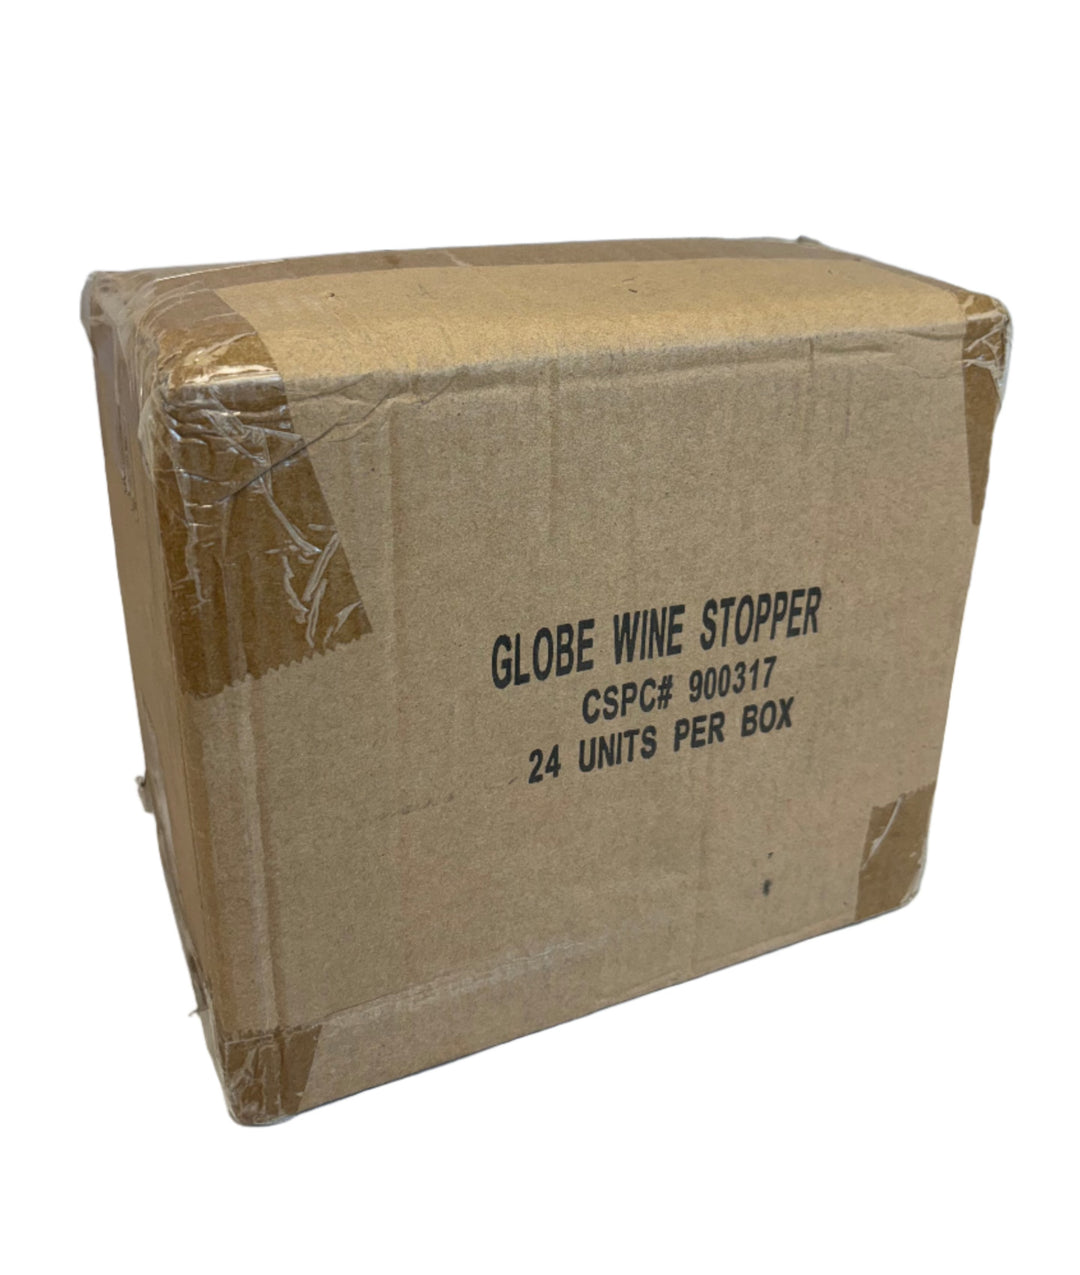 Globe Wine Stopper   25 Units per Box